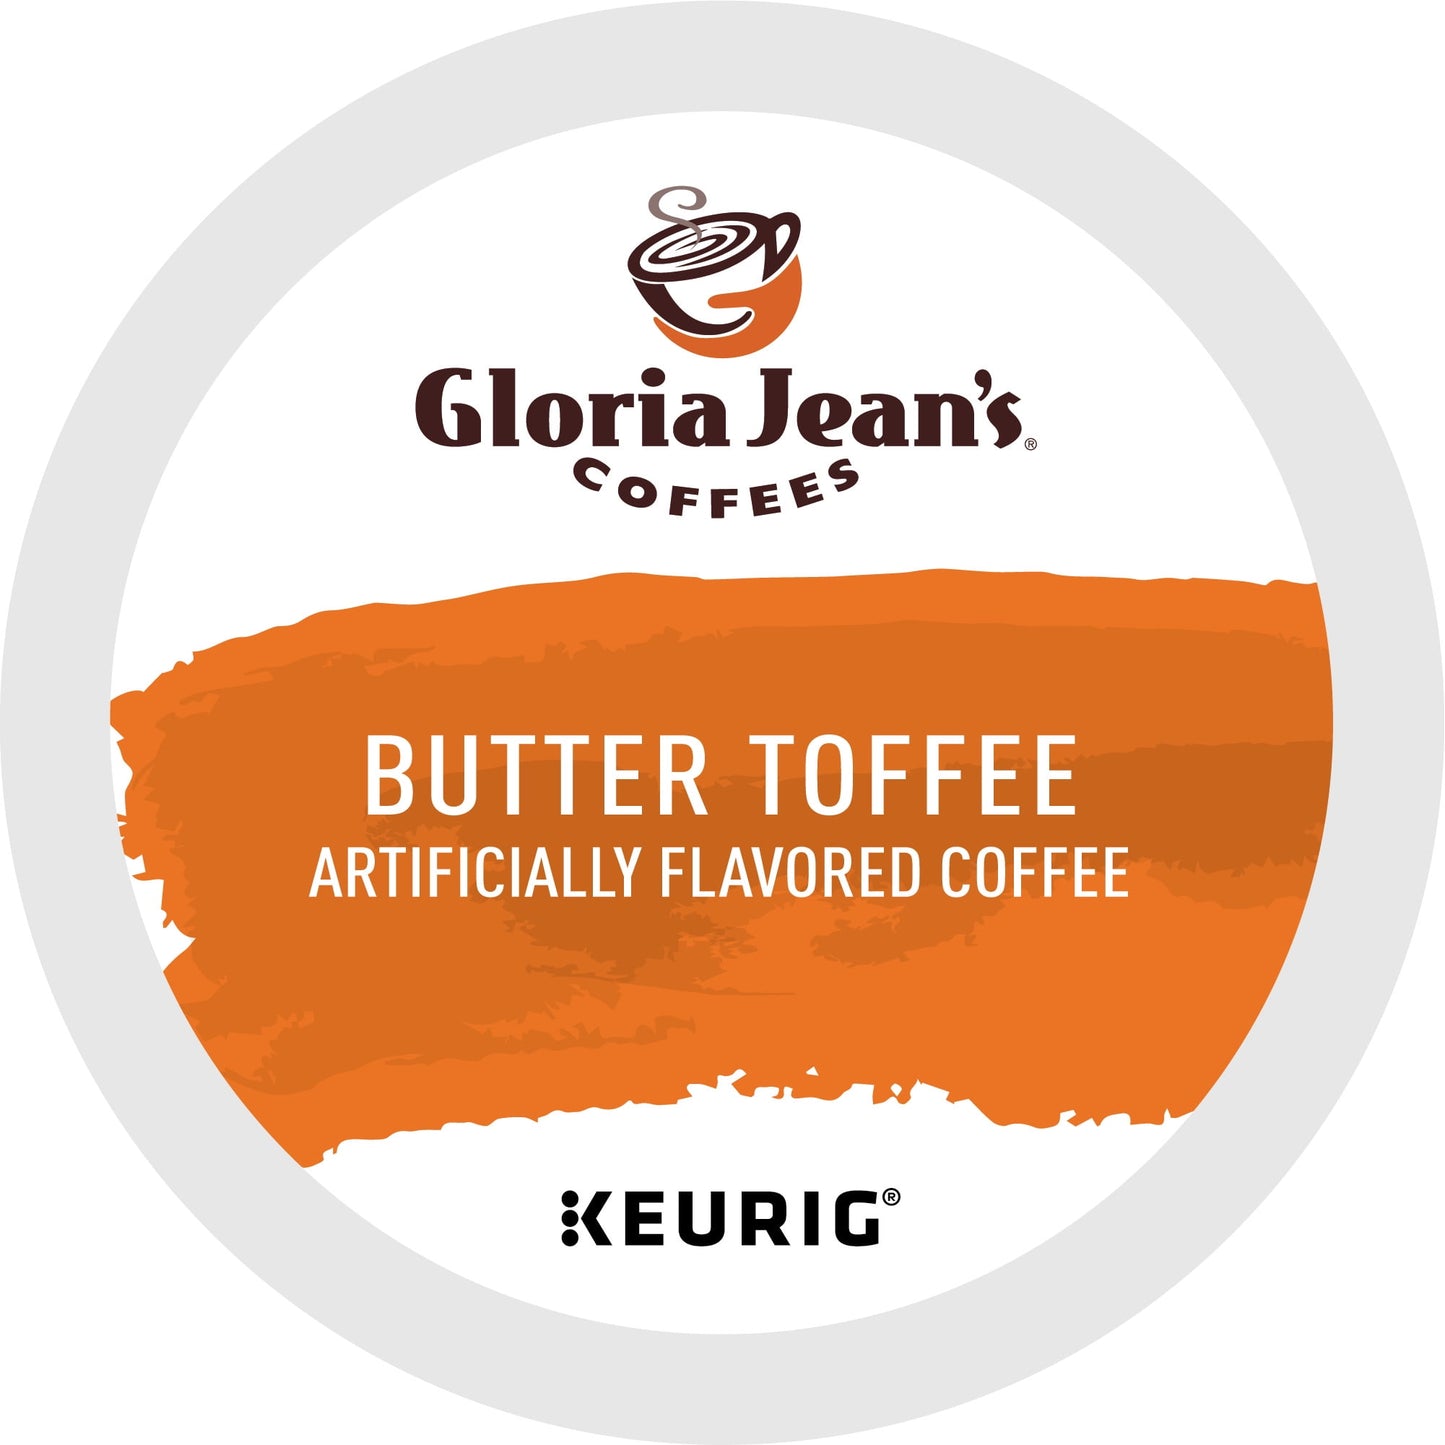 Gloria Jean's Coffee, Butter Toffee Medium Roast K-Cup Coffee Pods, 24